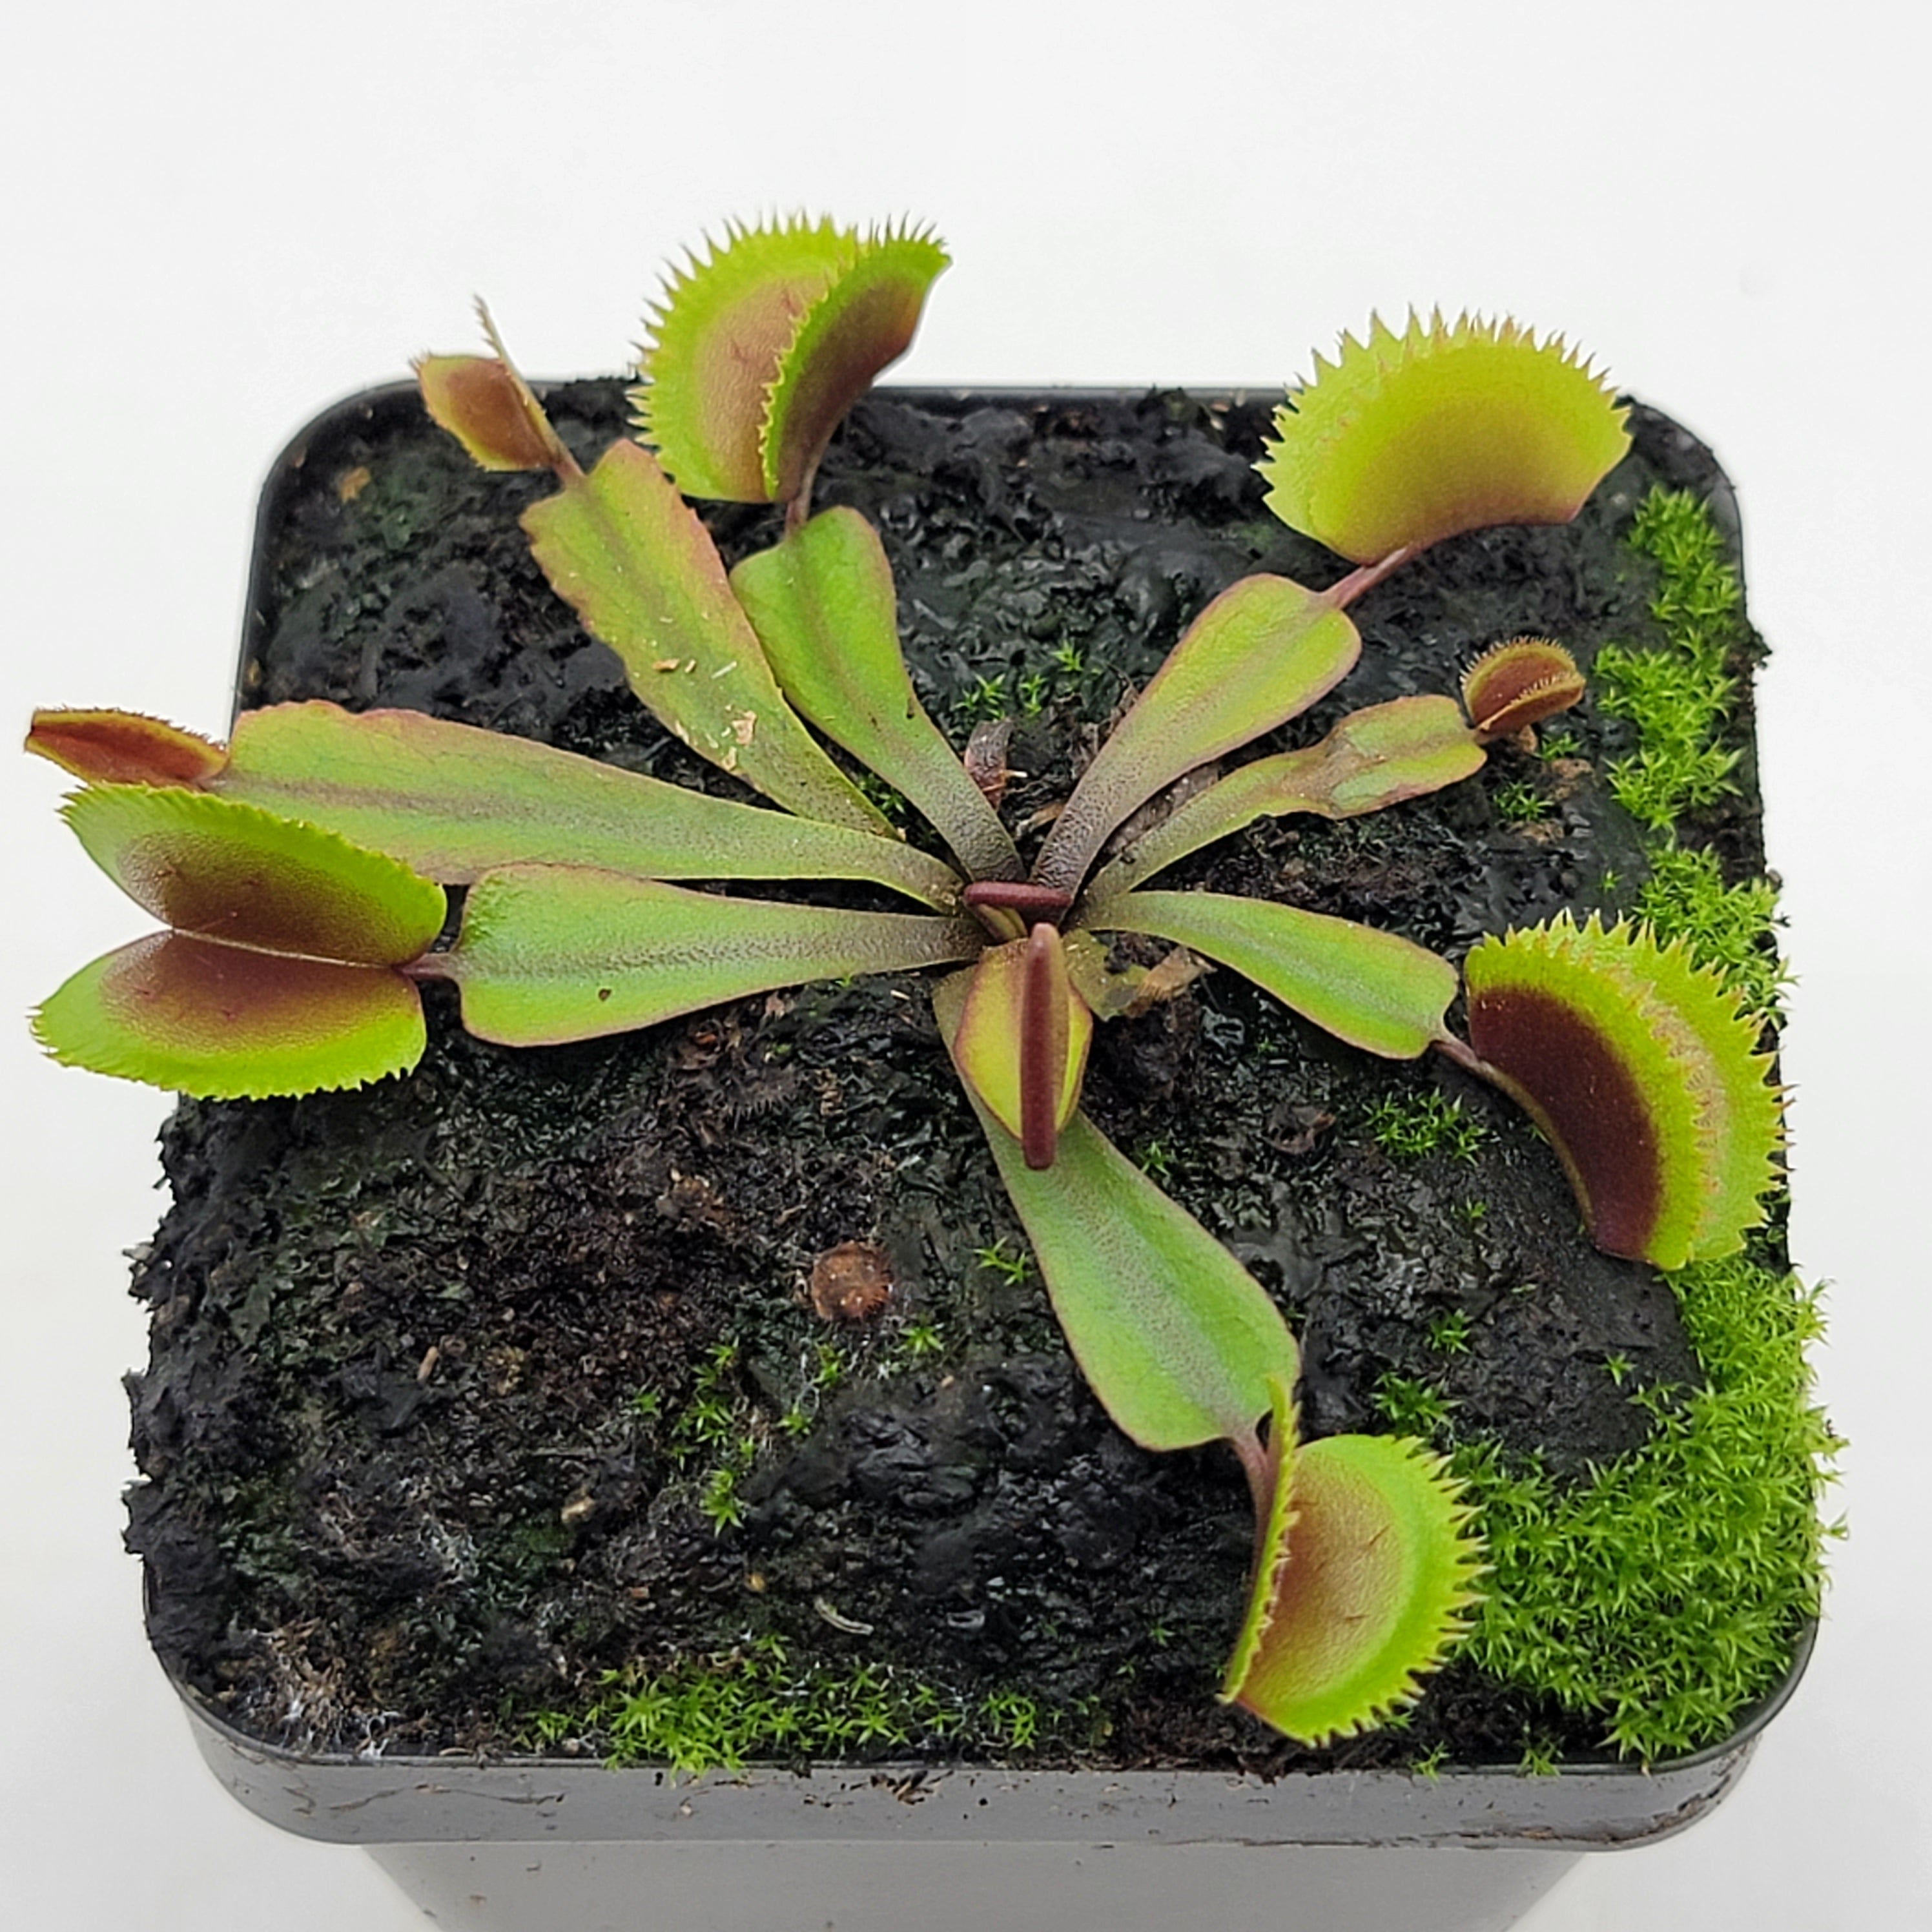 Venus flytrap (Dionaea muscipula)  "Green midnight" - Rainbow Carnivorous Plants LLC